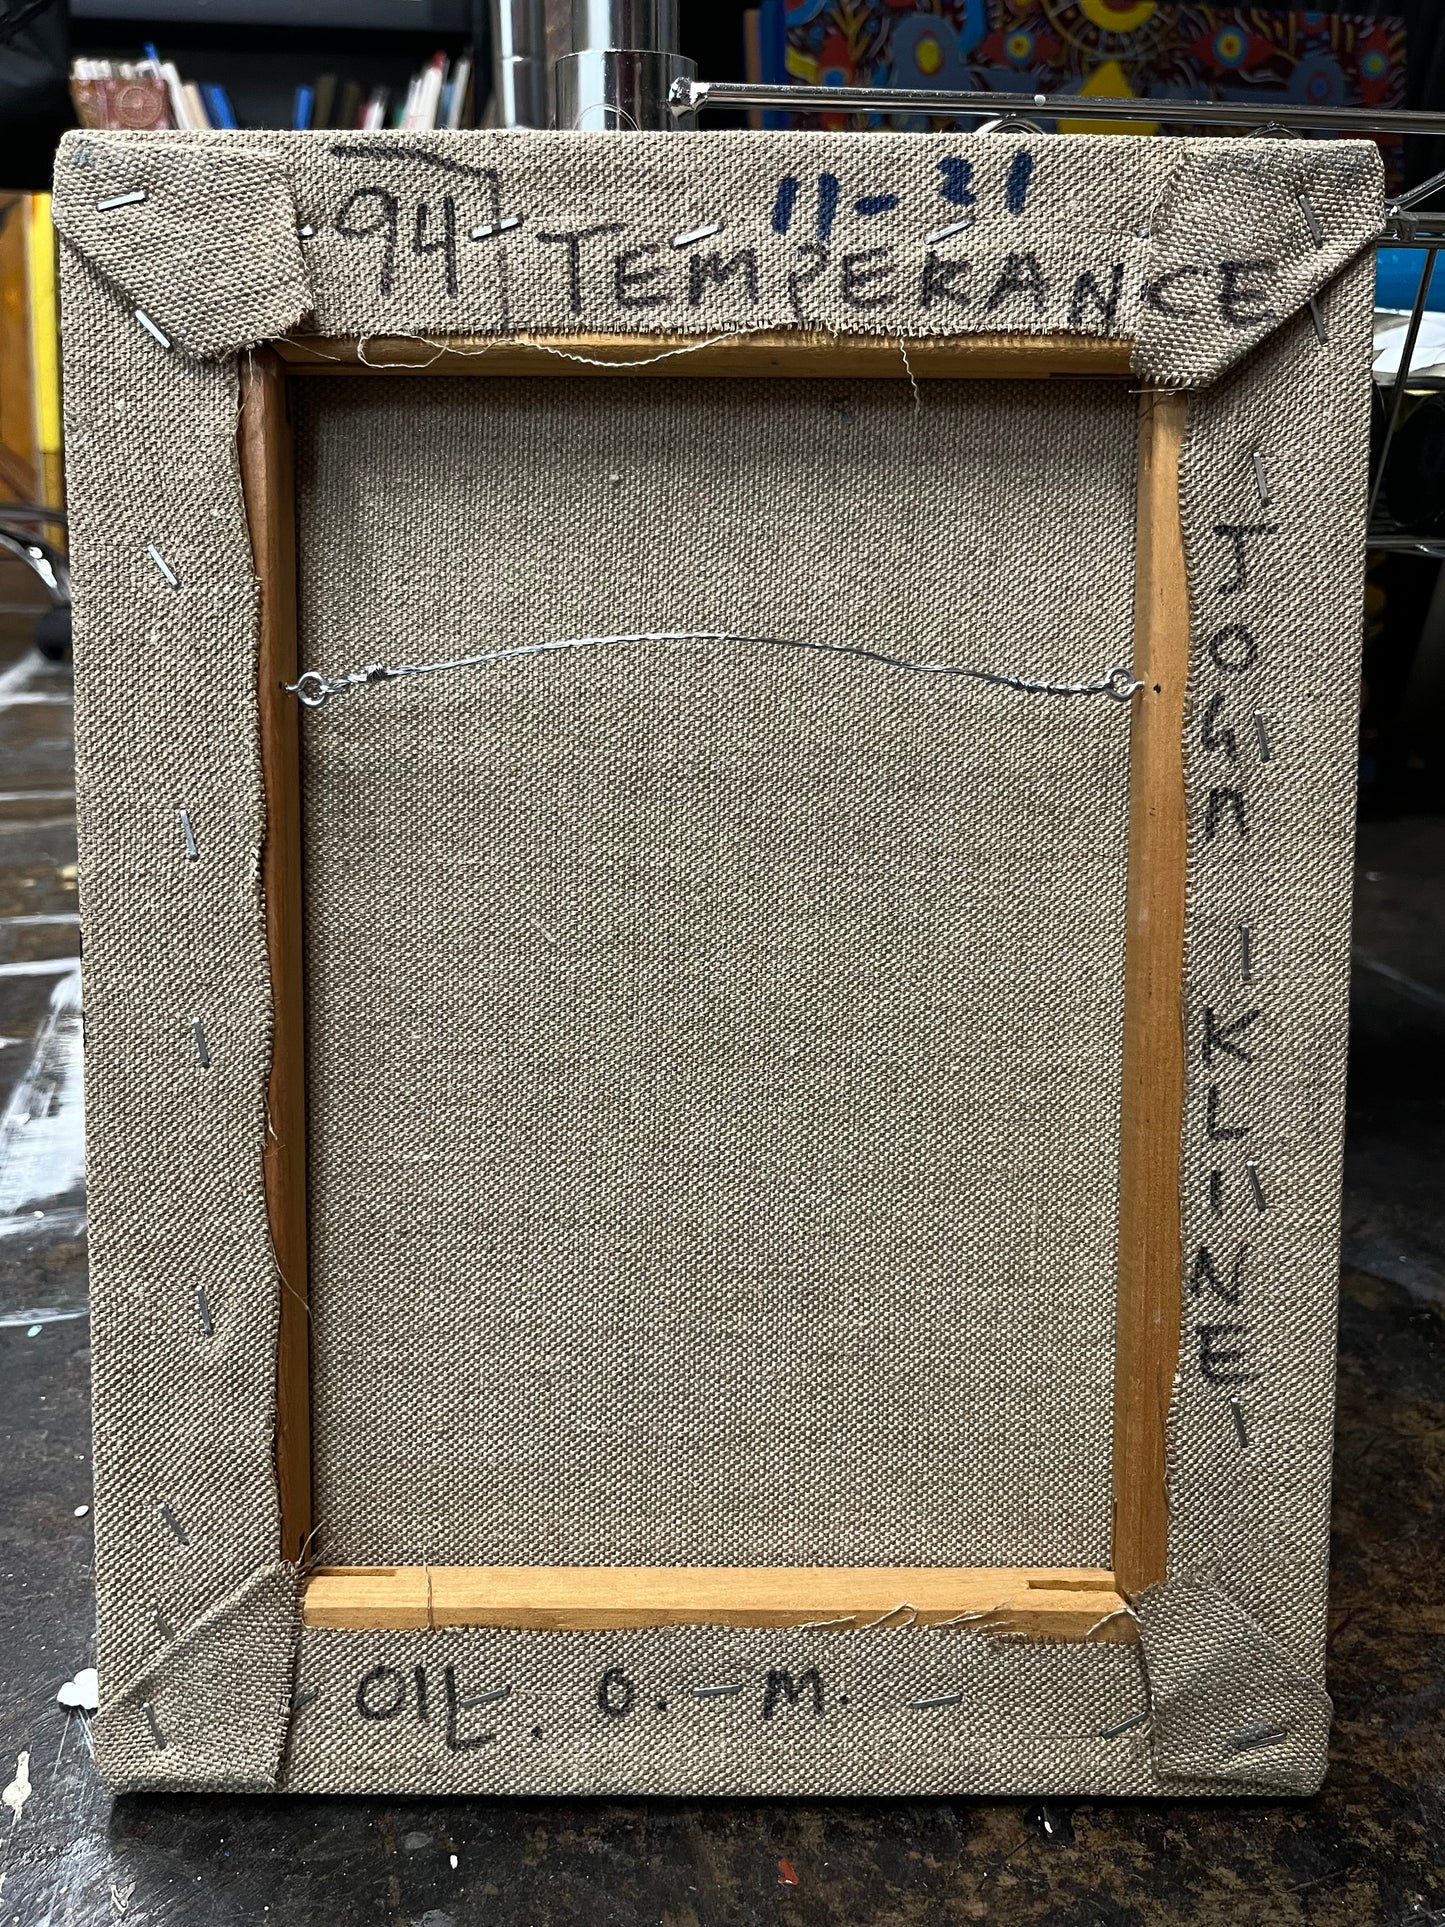 Temperance. Oil on Linen. 10" x 13". John Kline Artwork. Small abstract painting.